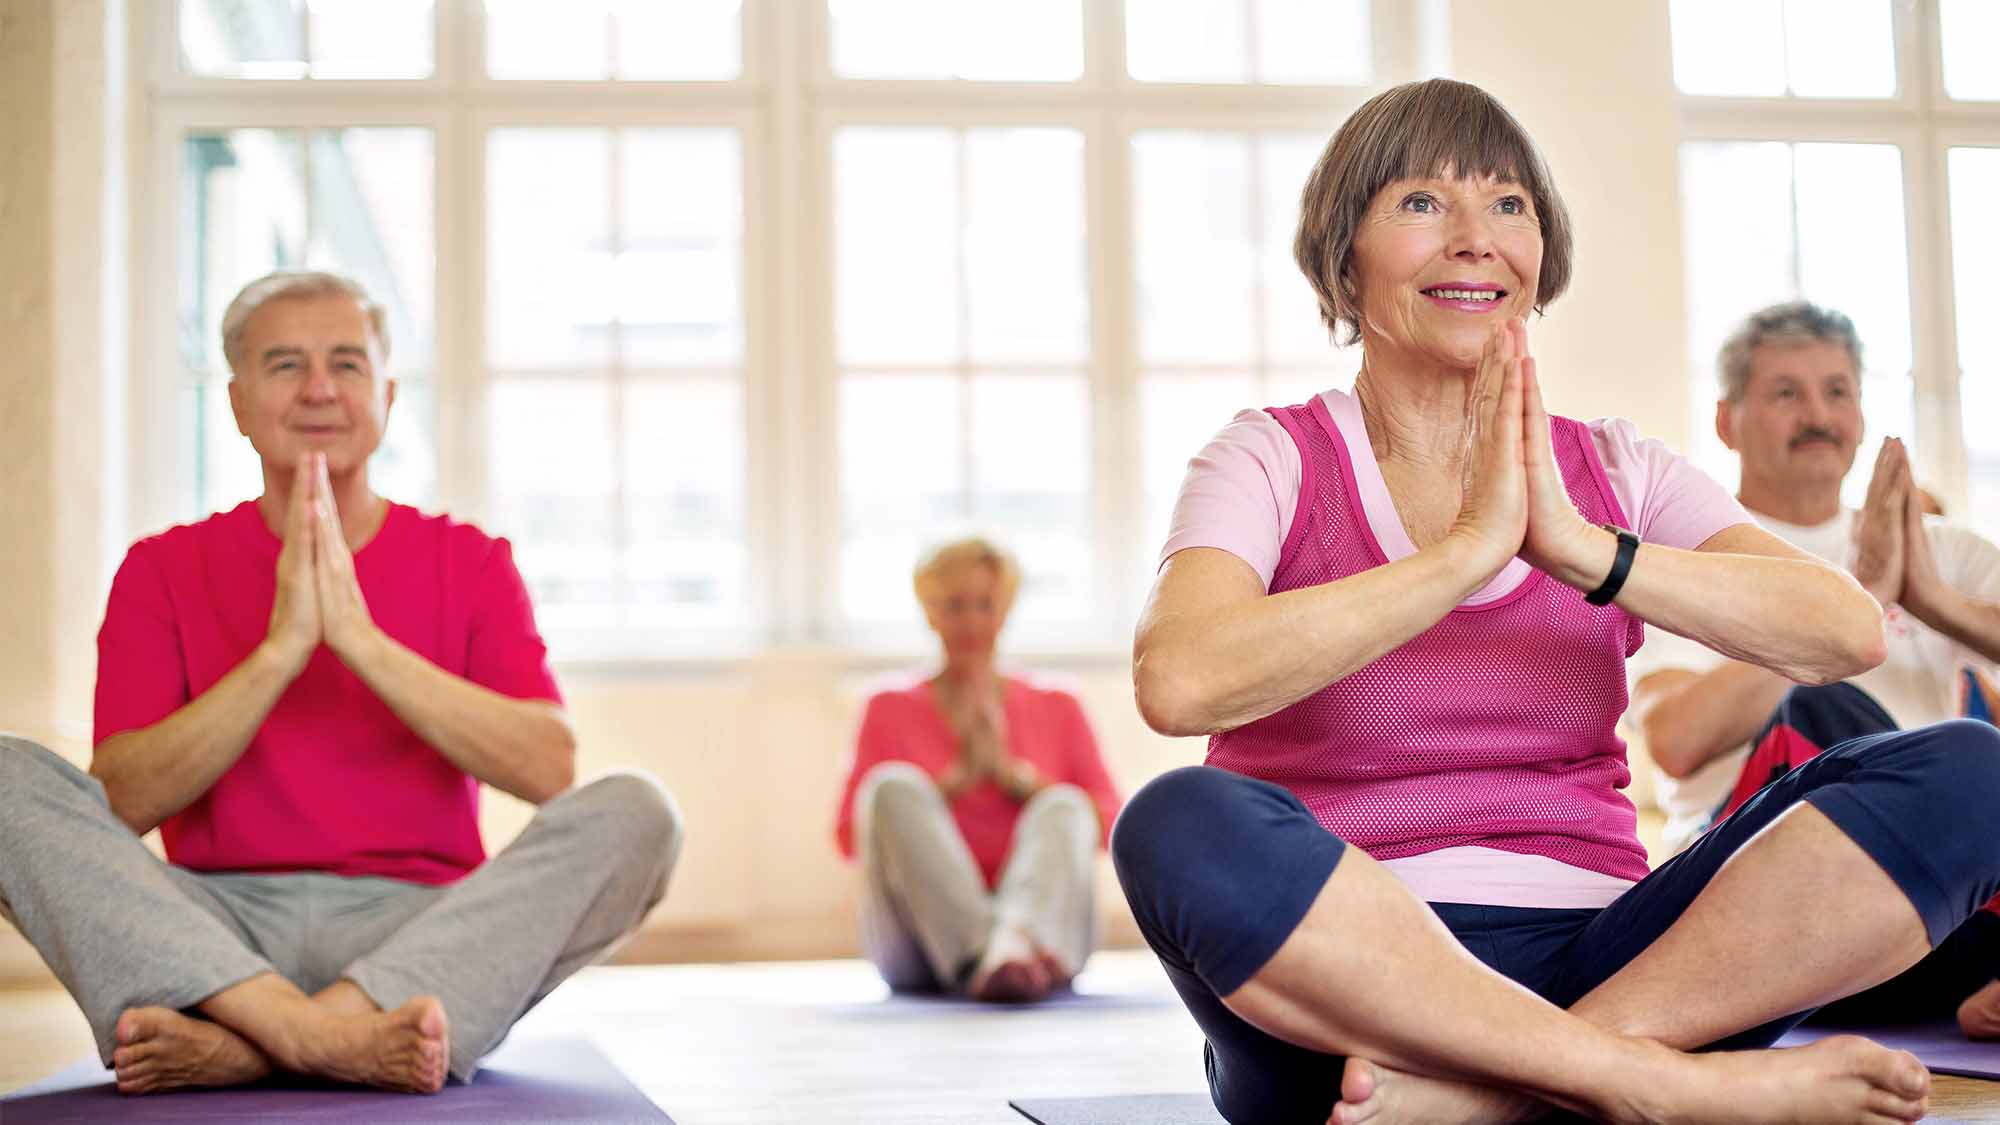 Seniors enjoying Yoga classes at their senior living community